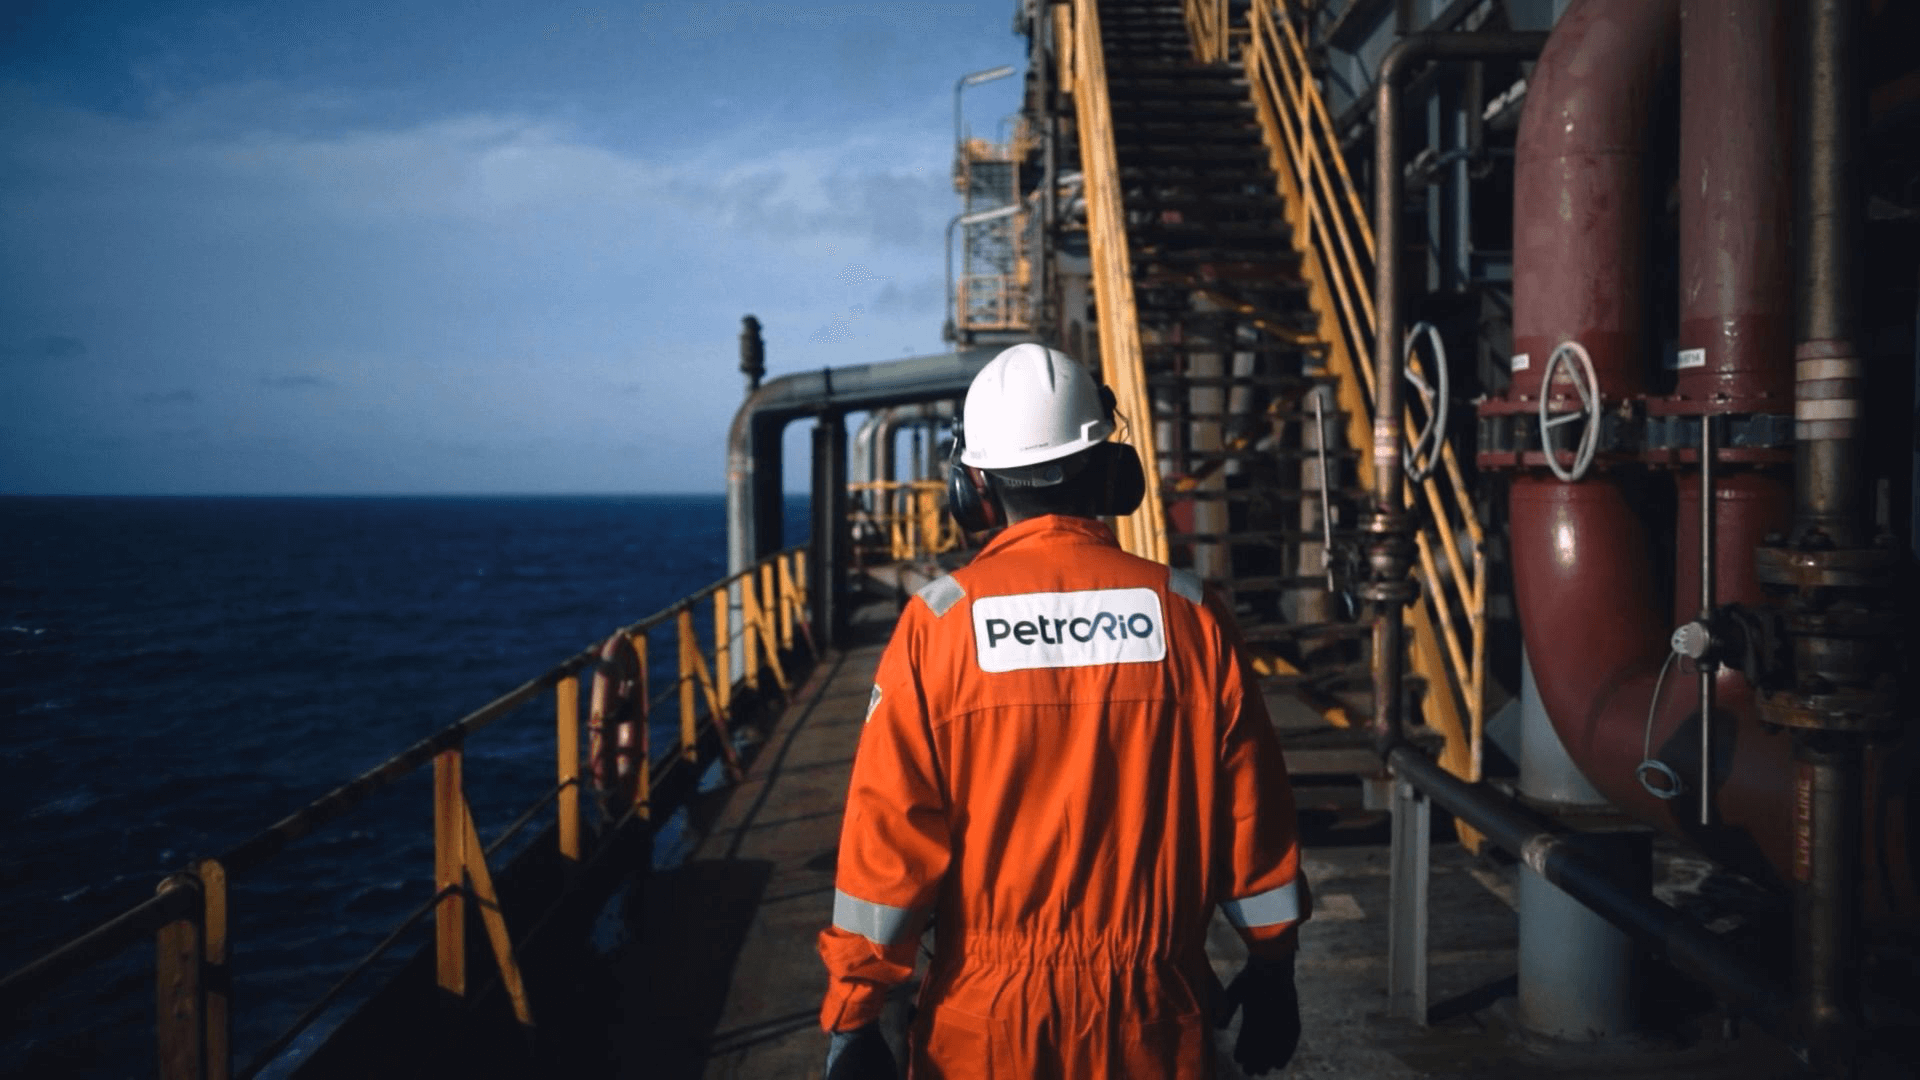 visual identity company shares PetroRio oil and gas